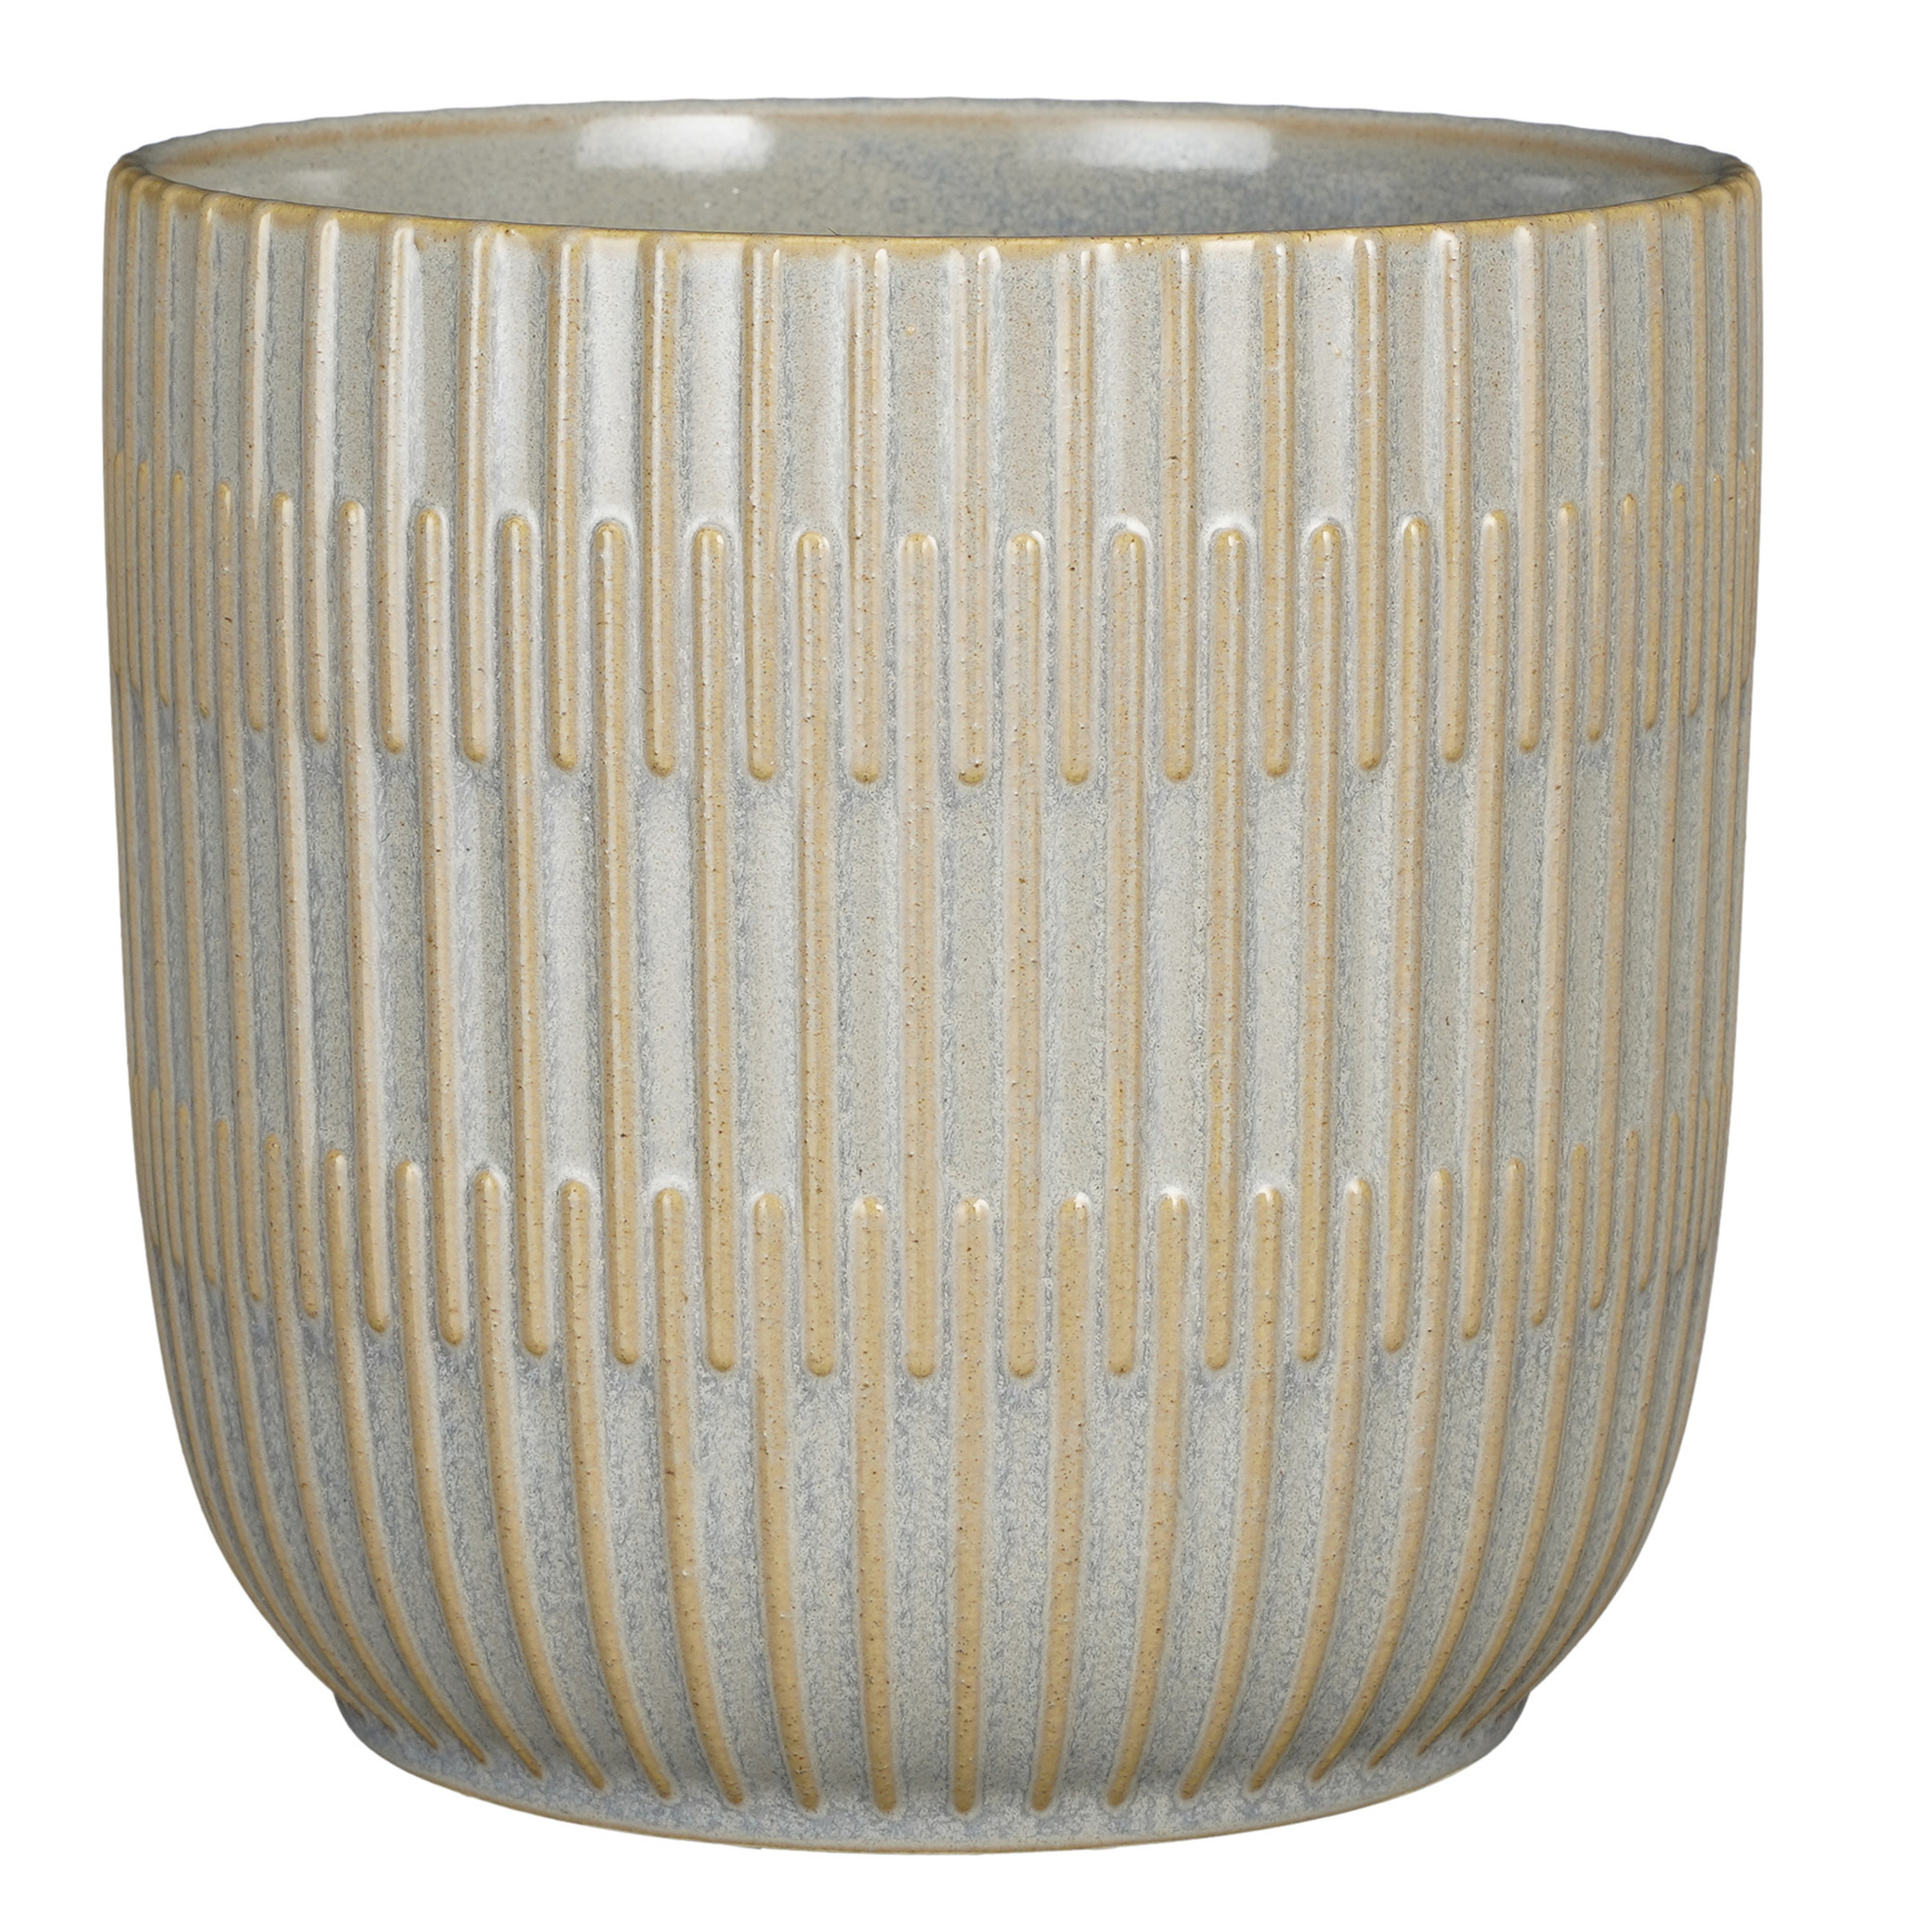 Plantenpot-bloempot keramiek lichtgrijs stripes patroon D19-H18 cm